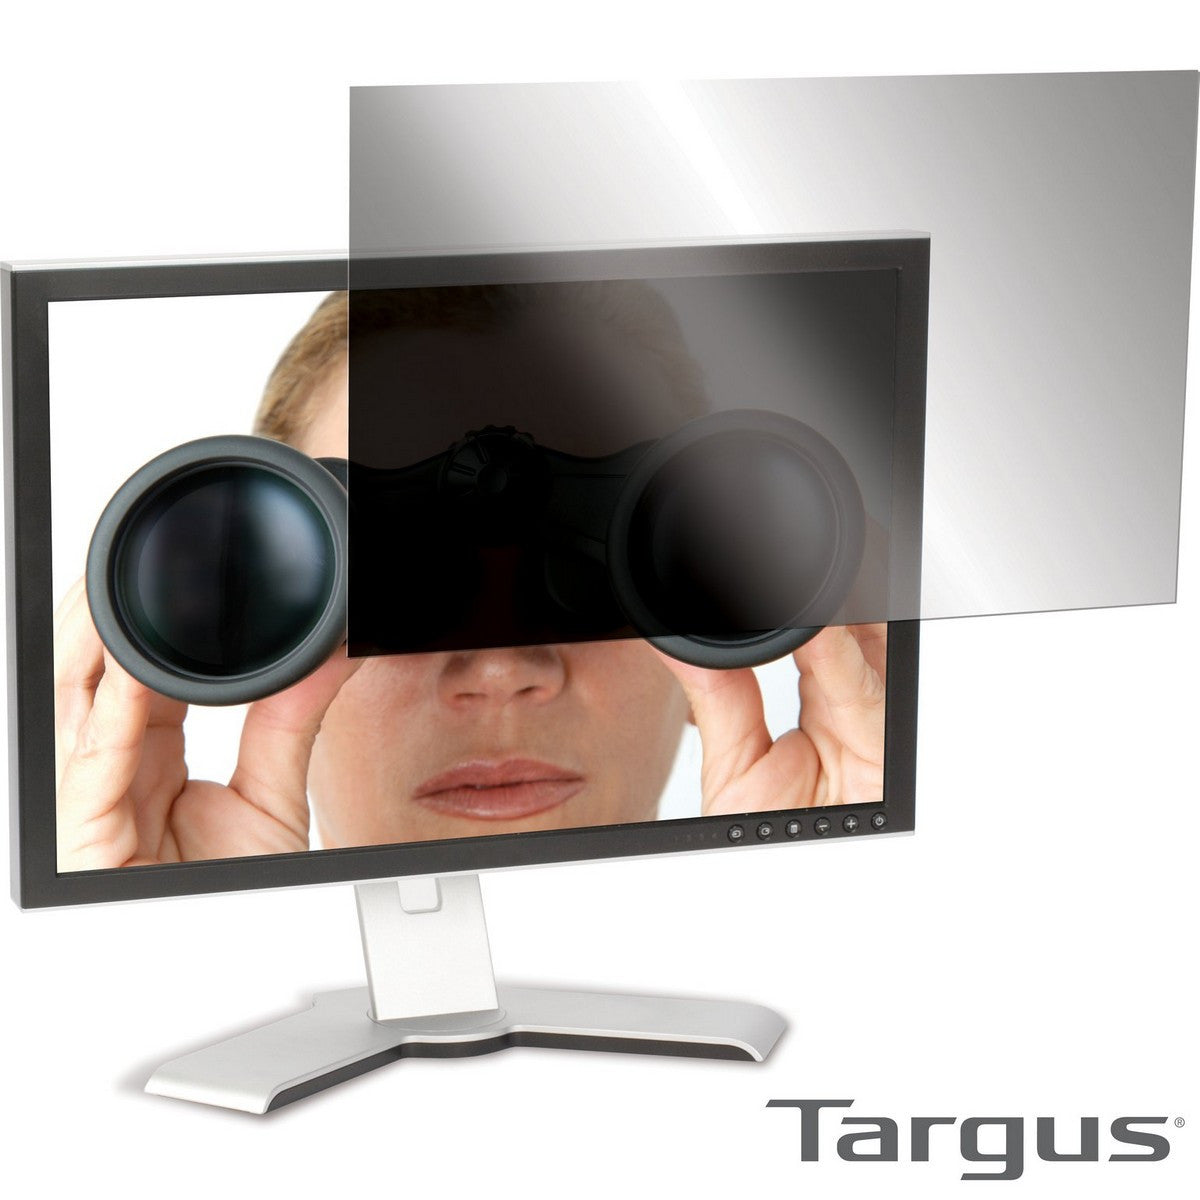 dFkoONfOSbGB9ReH1DzO_Targus_4vu-privacy-screen-with-anti-bluelight-cut-for-widescreen-monitors-yv-com-hk-o.jpg